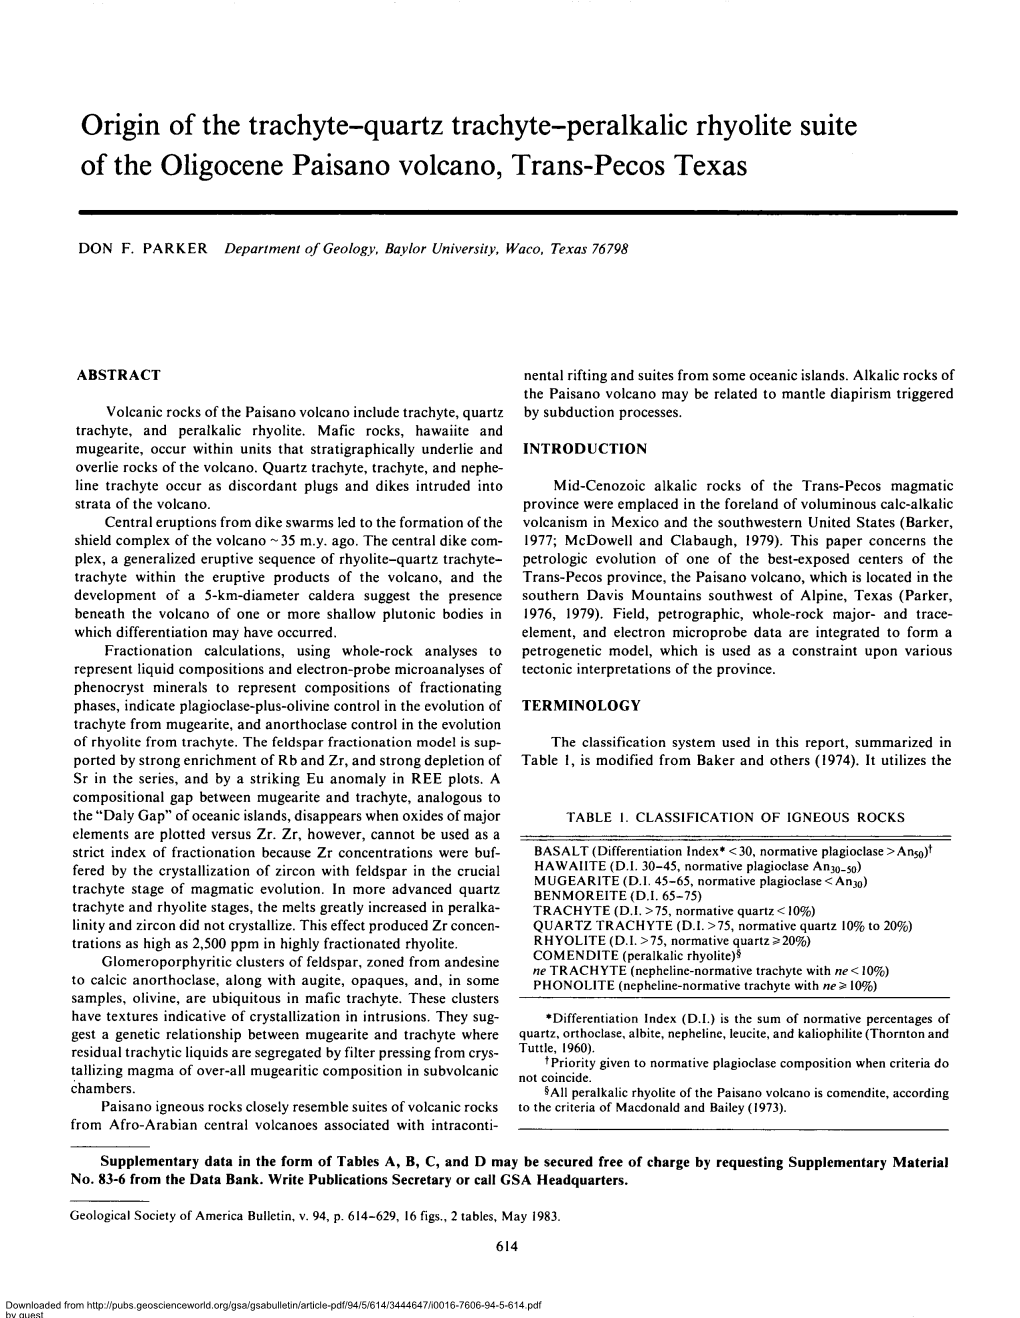 Origin of the Trachyte-Quartz Trachyte-Peralkalic Rhyolite Suite of the Oligocene Paisano Volcano, Trans-Pecos Texas